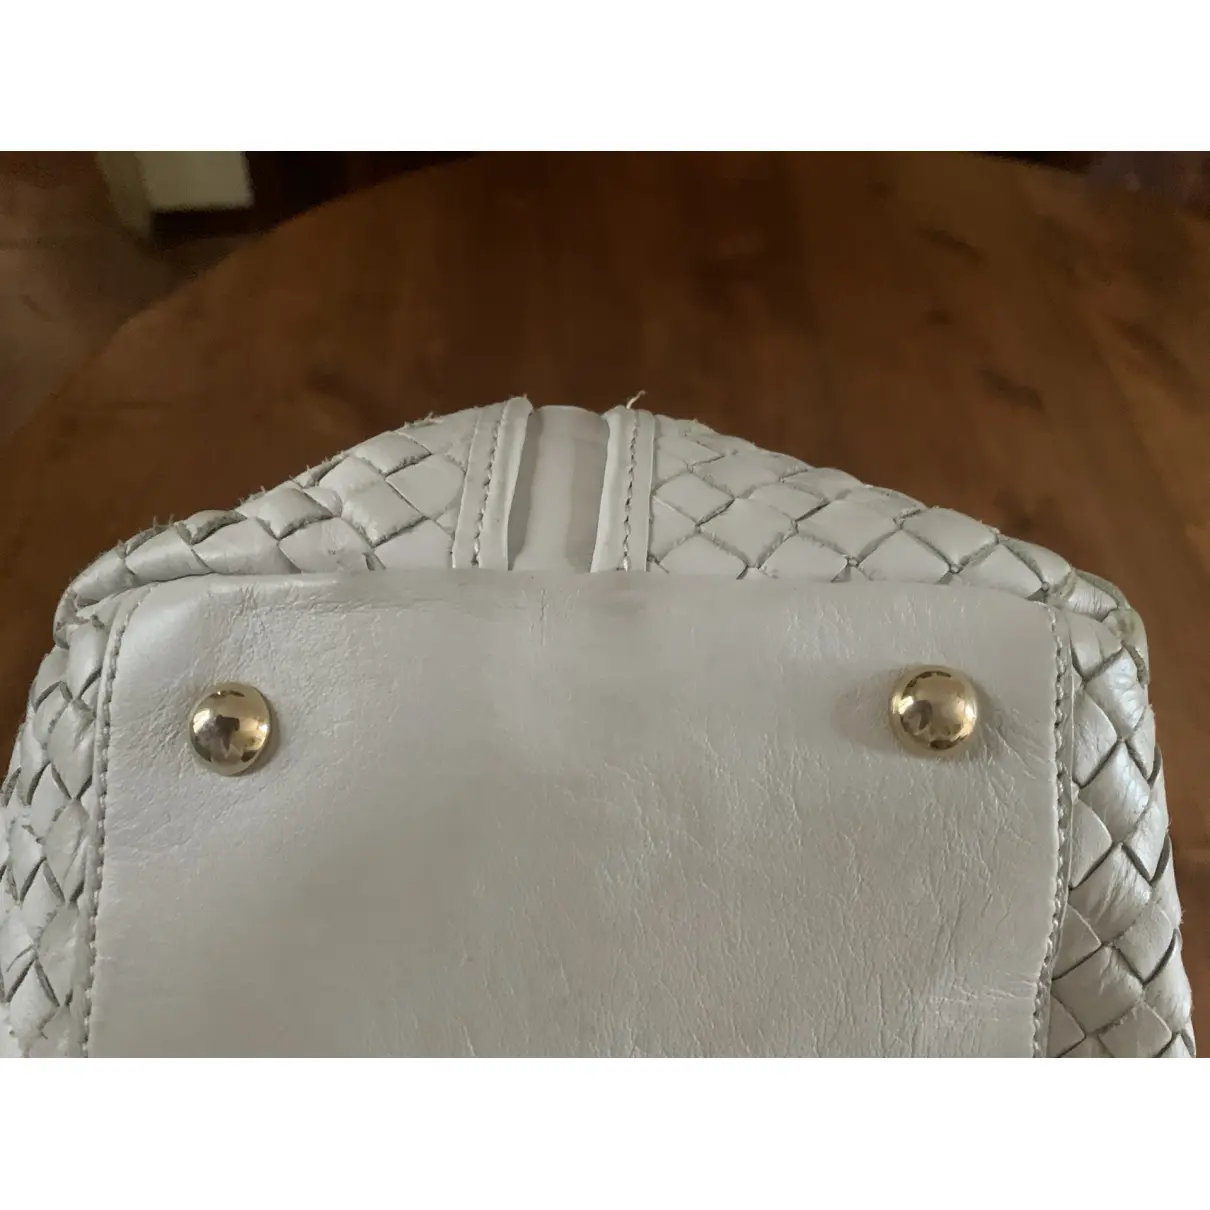 Leather handbag Baldinini